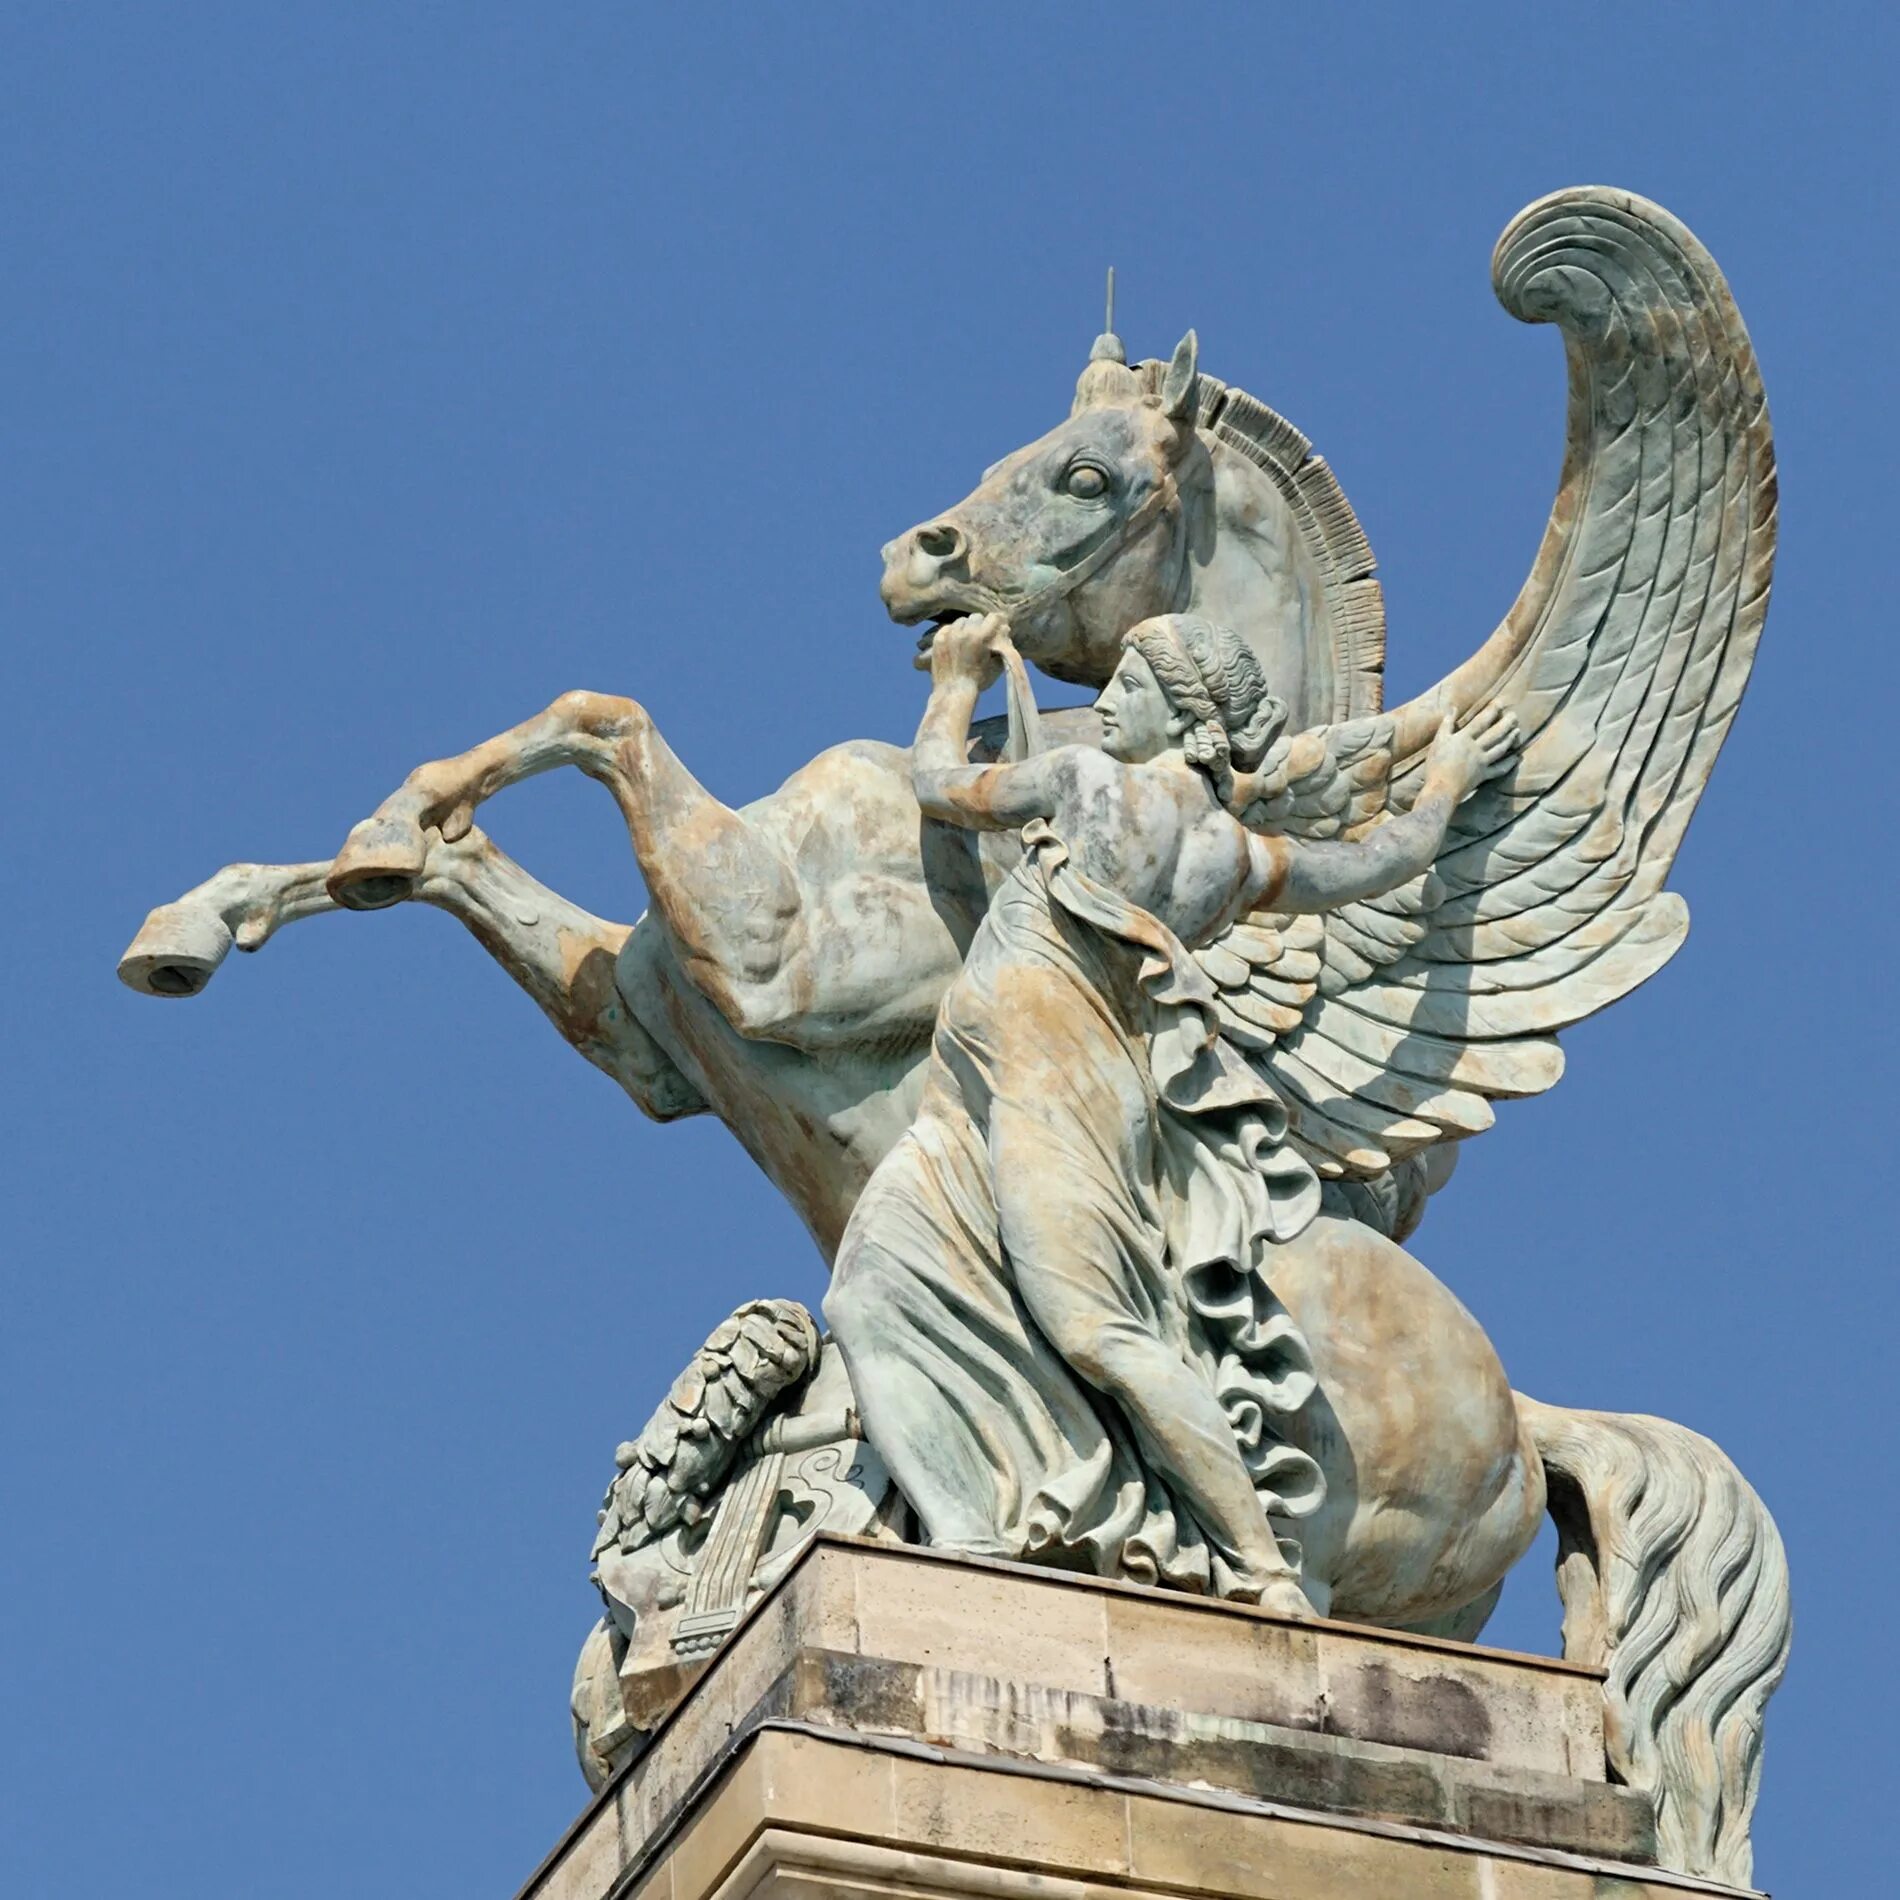 Скульптура на коне. Эжен-Луи Лекен. Пегас скульптура древняя Греция. Eugène Louis Lequesne скульптор. Статуя Пегаса в Греции.